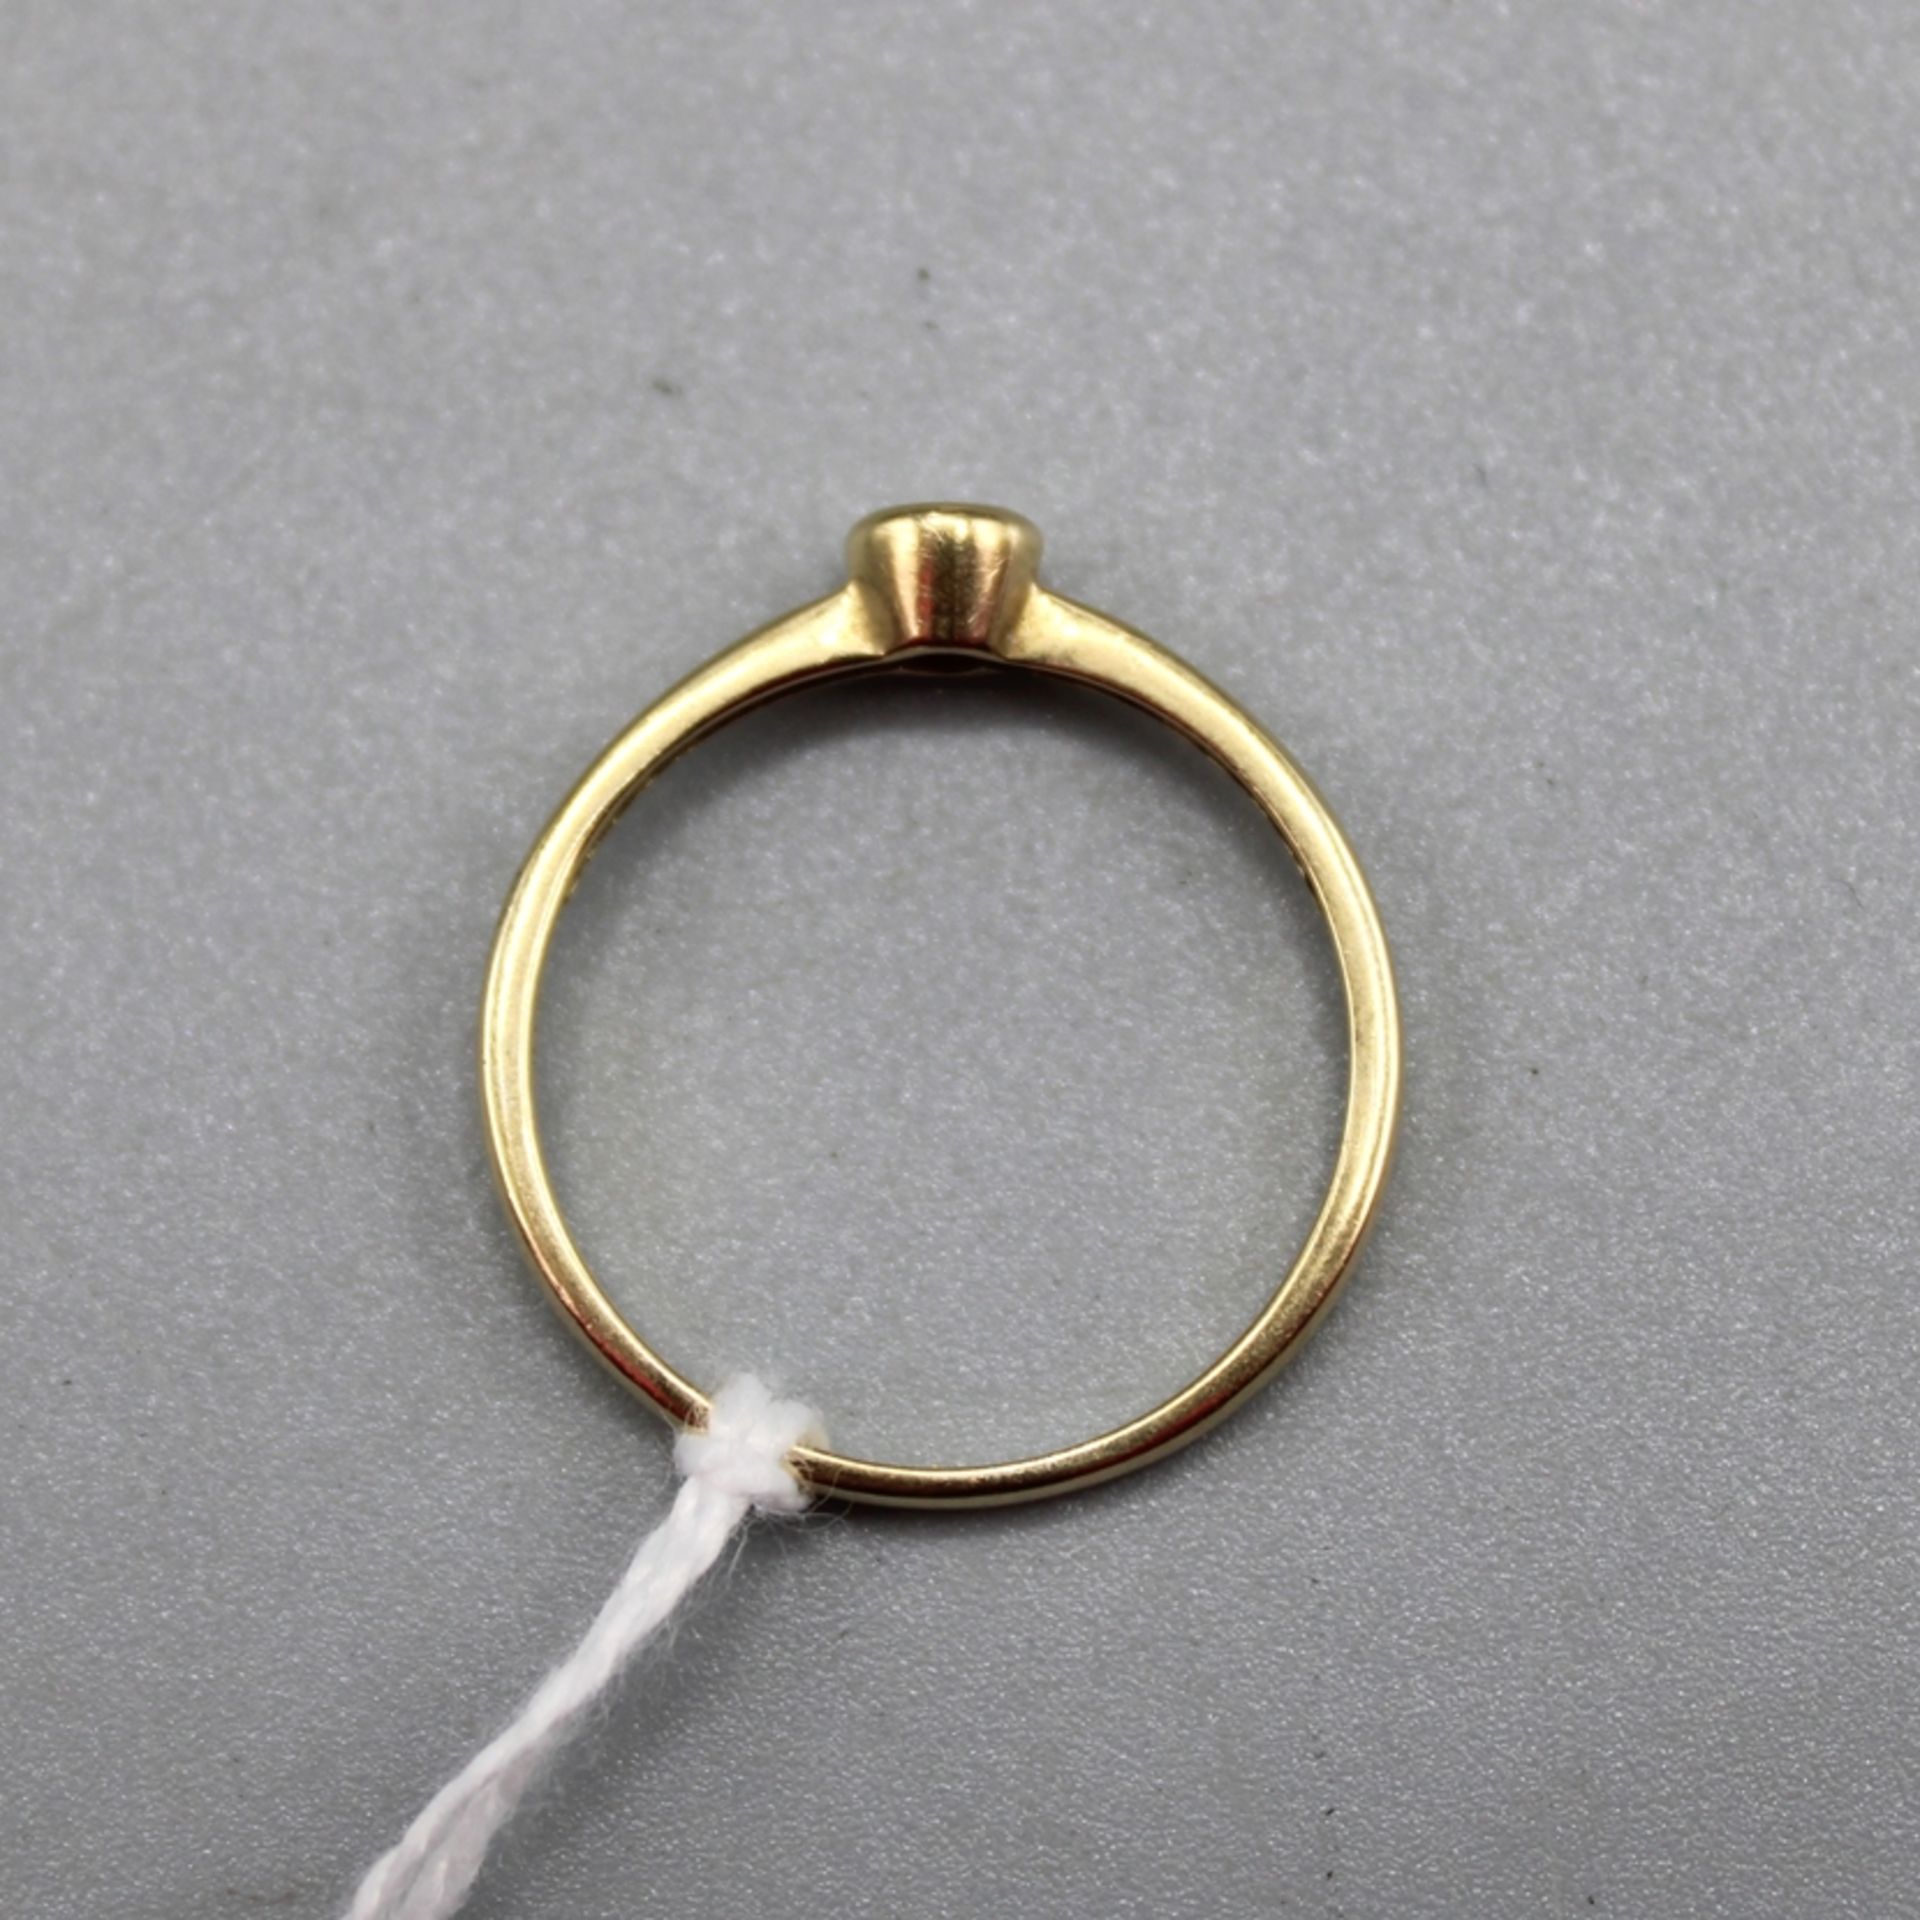 Brillantring 0,08 ct. Gold 585, Ring Ø ca. 17,5 mm, 1,6 g - Image 2 of 2